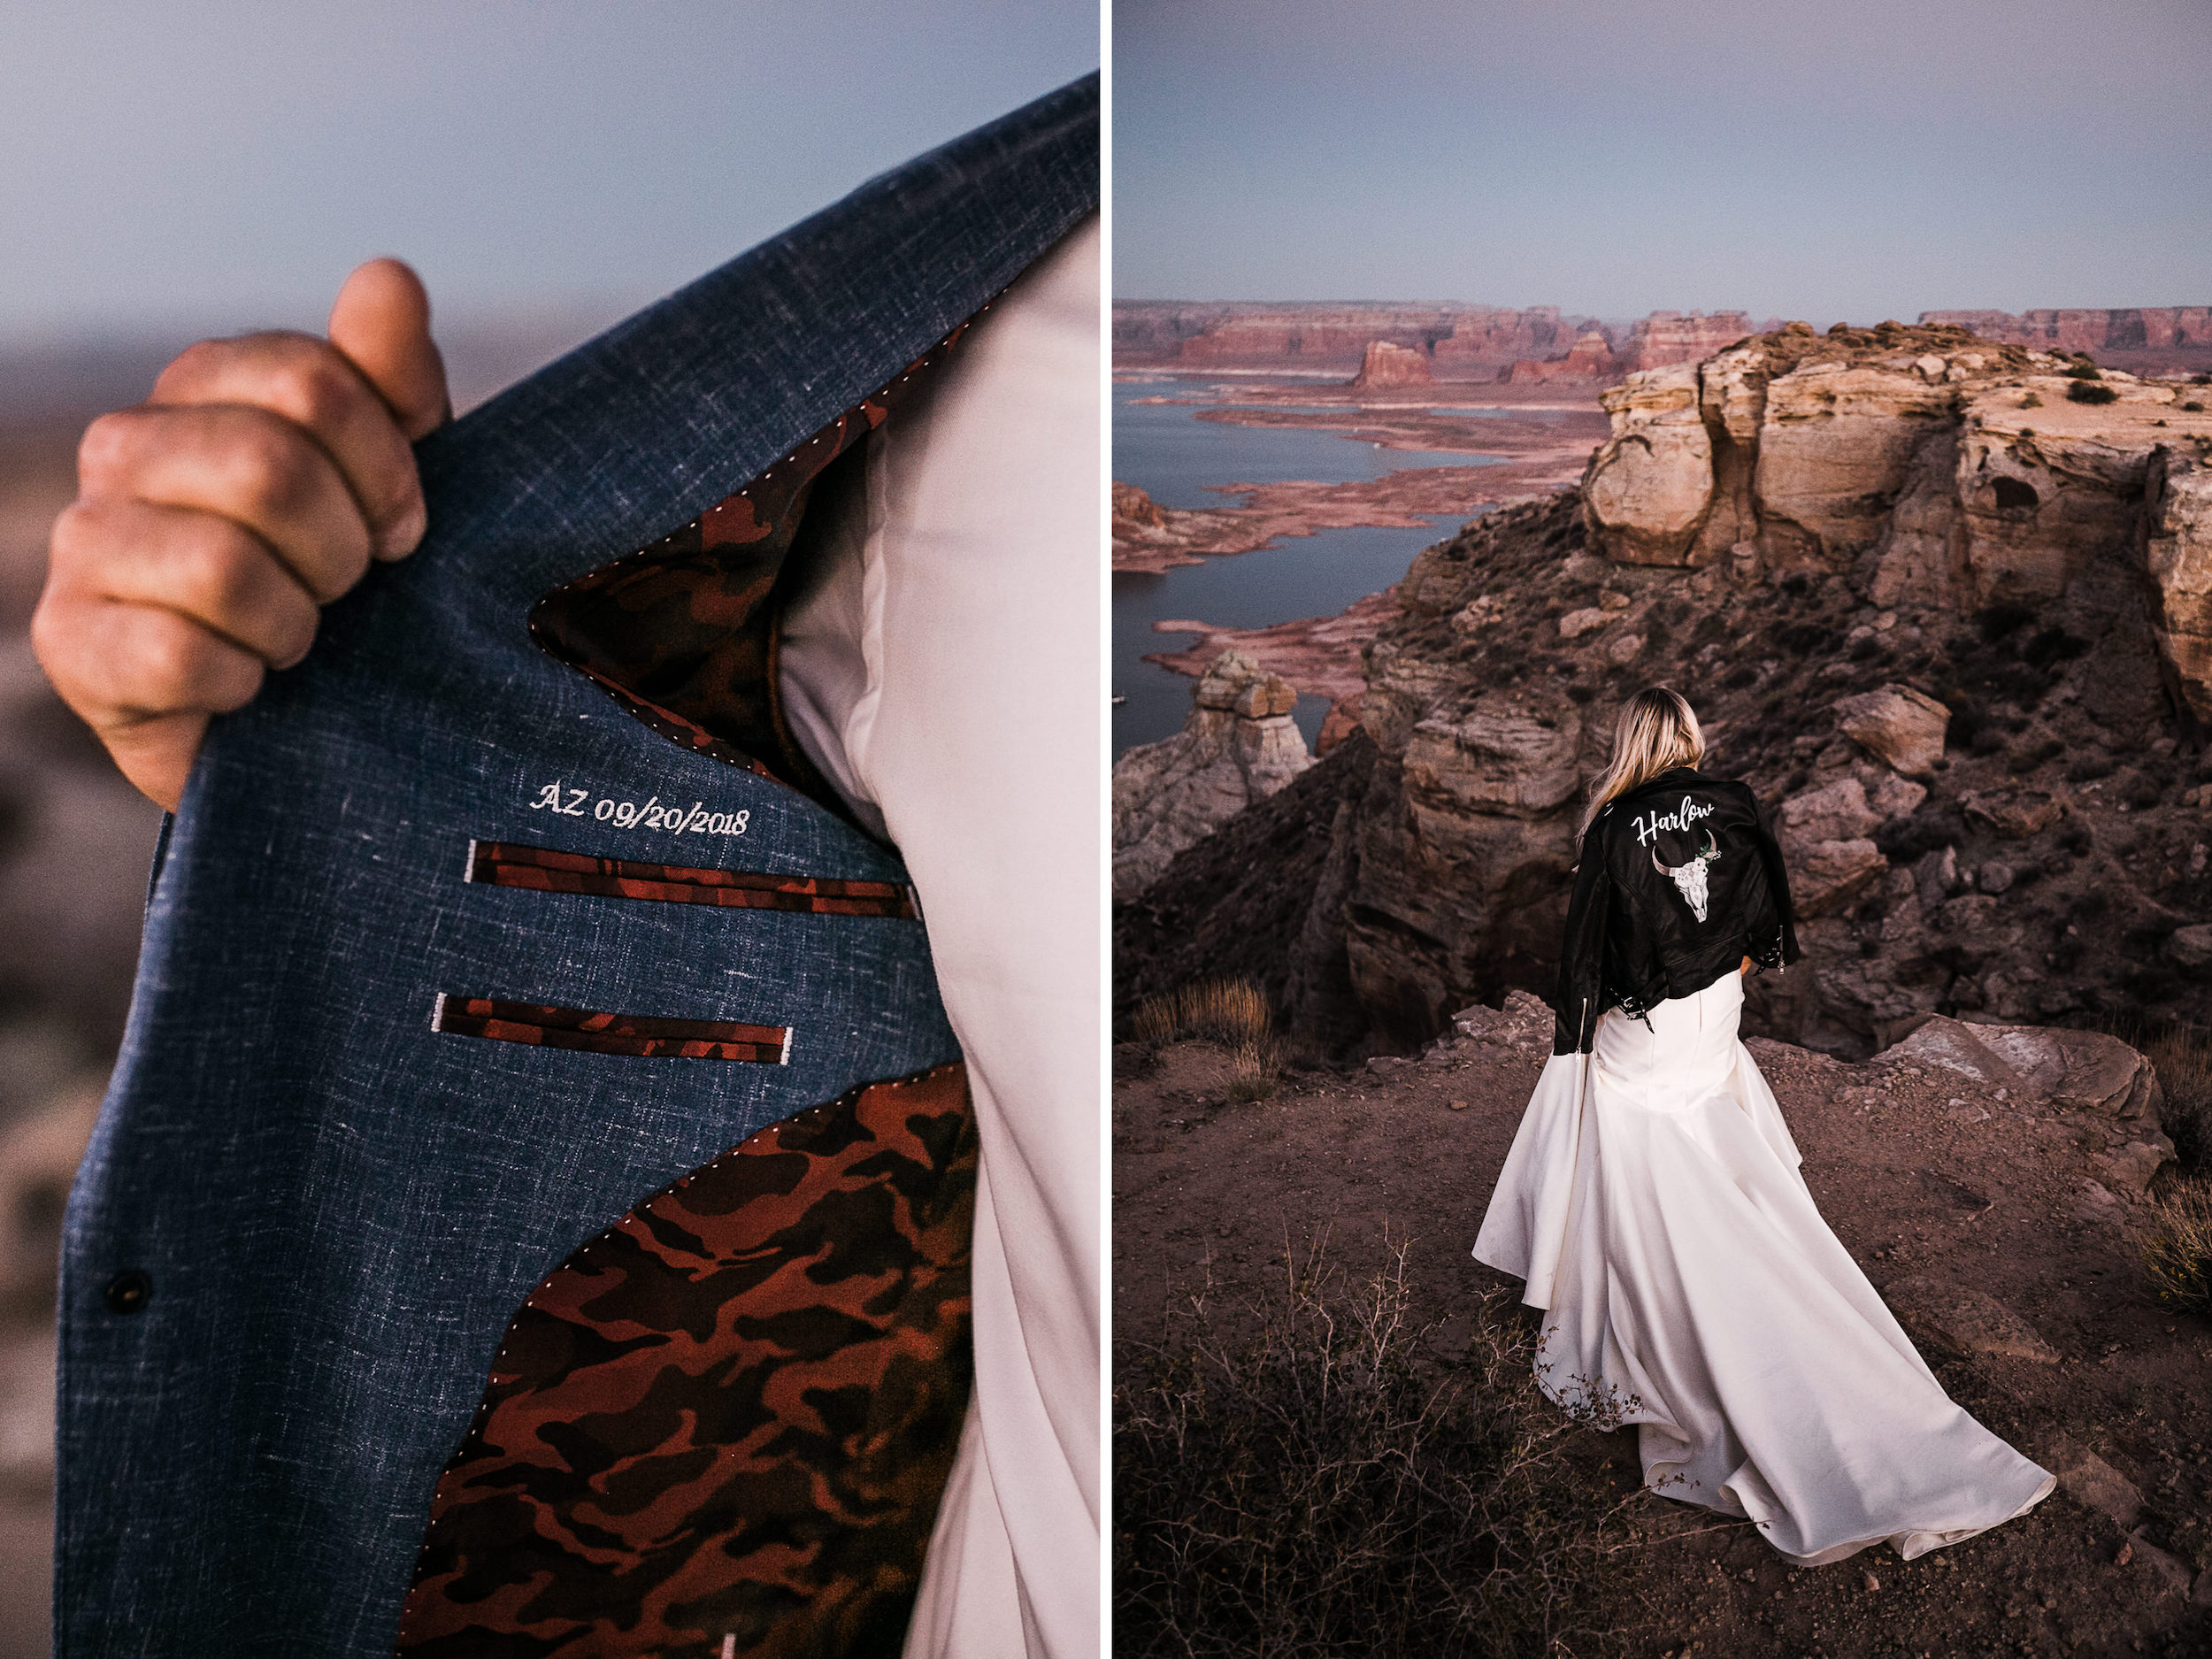 jeep elopement in page, arizona | lake powell adventure wedding | desert elopement inspiration | utah wedding and elopement photographer | the hearnes